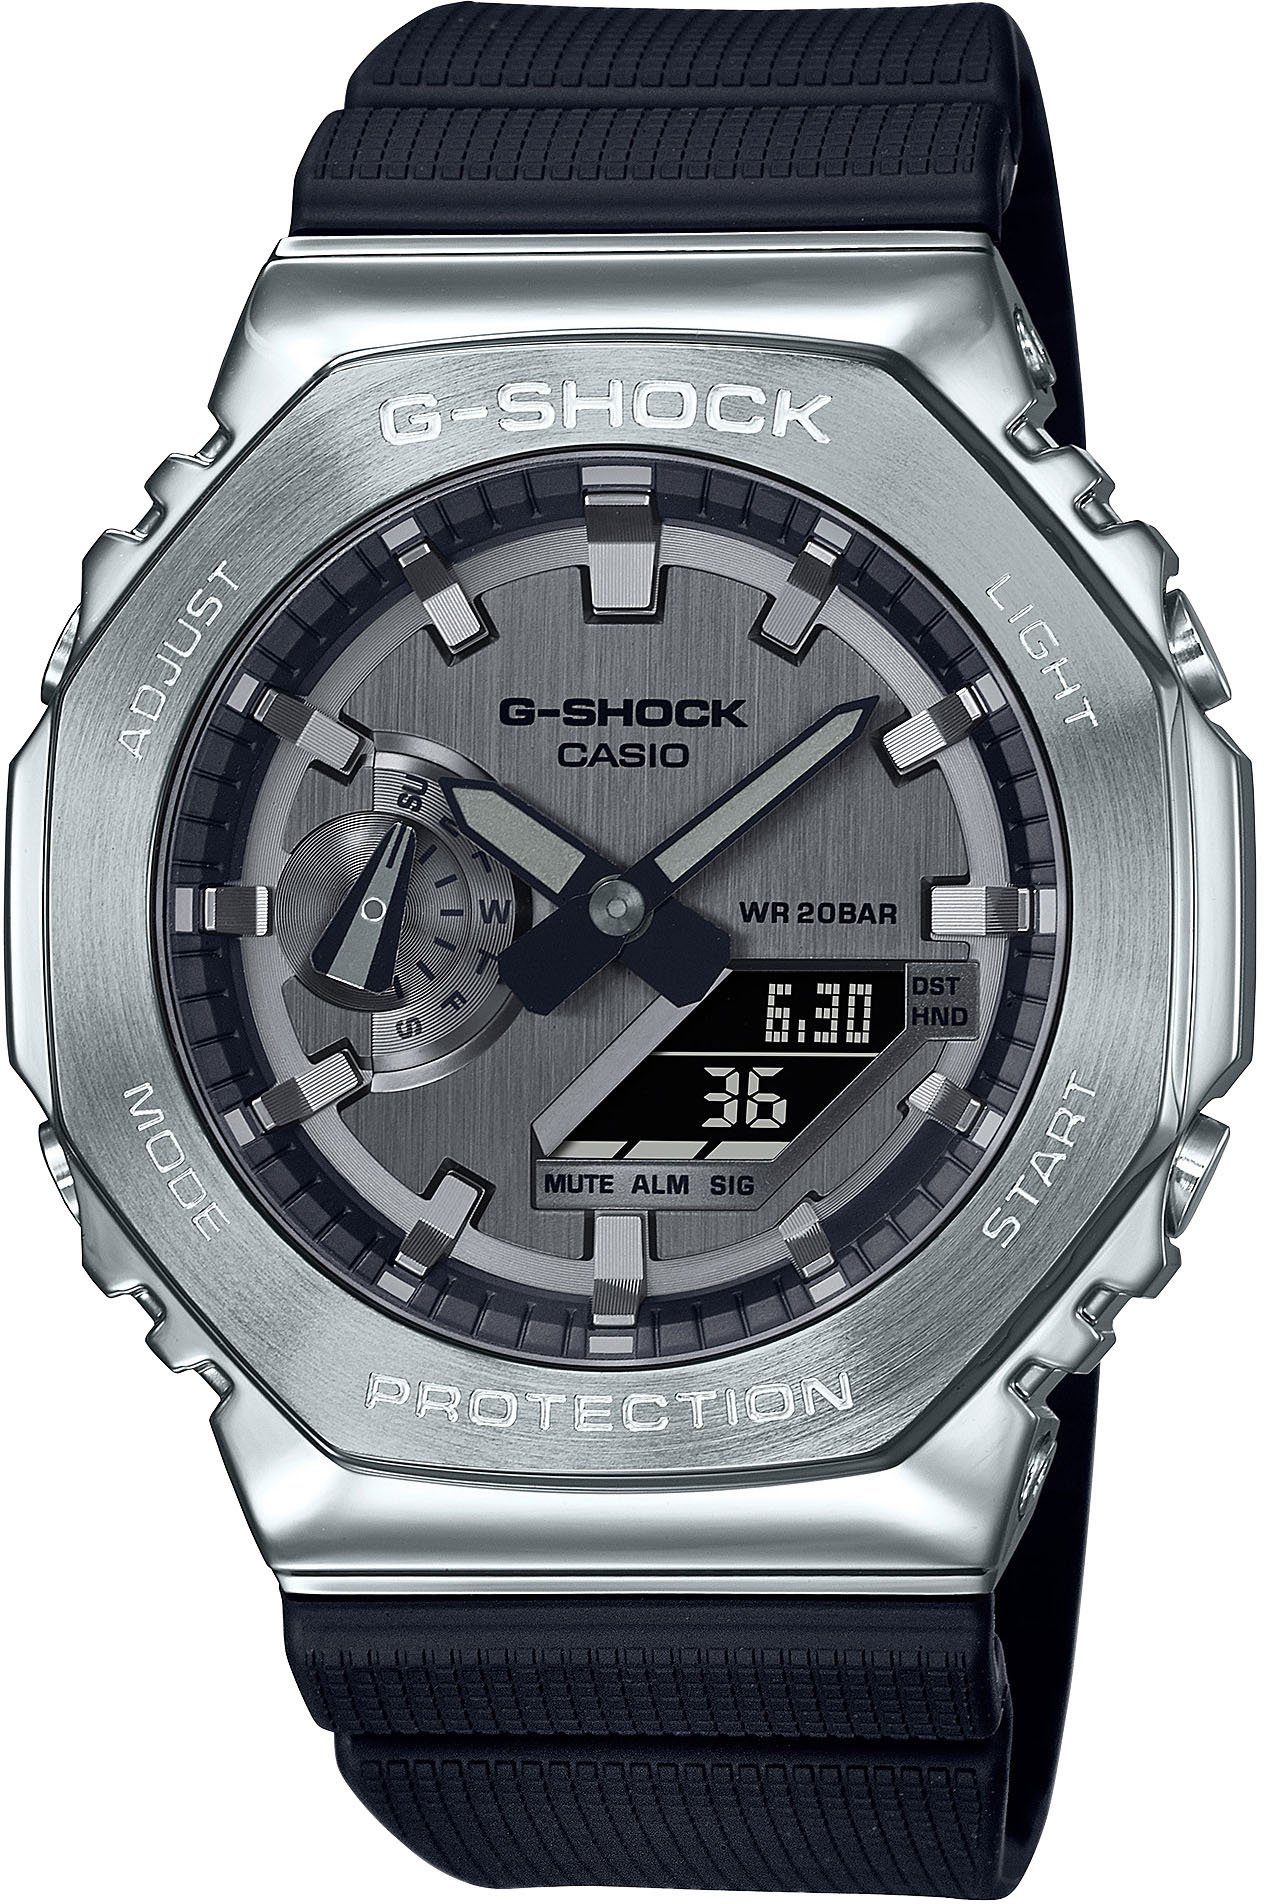 GM-2100-1AER G-SHOCK Chronograph CASIO